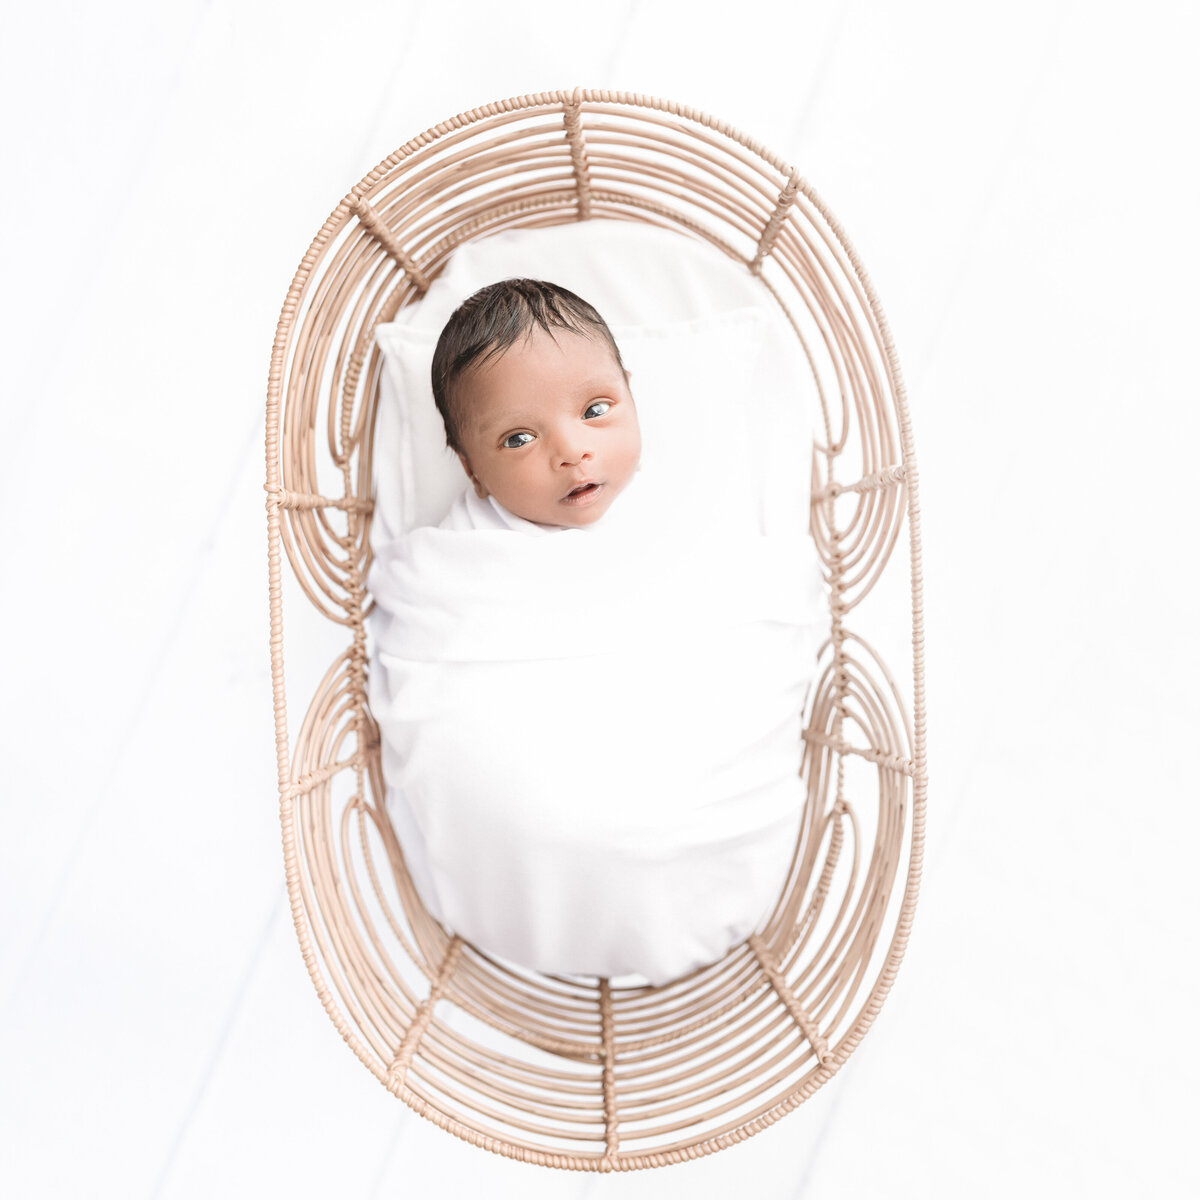 Image is of an awake newborn baby in a bamboo bassinet prop. Studio image by Lauren Vanier Photography